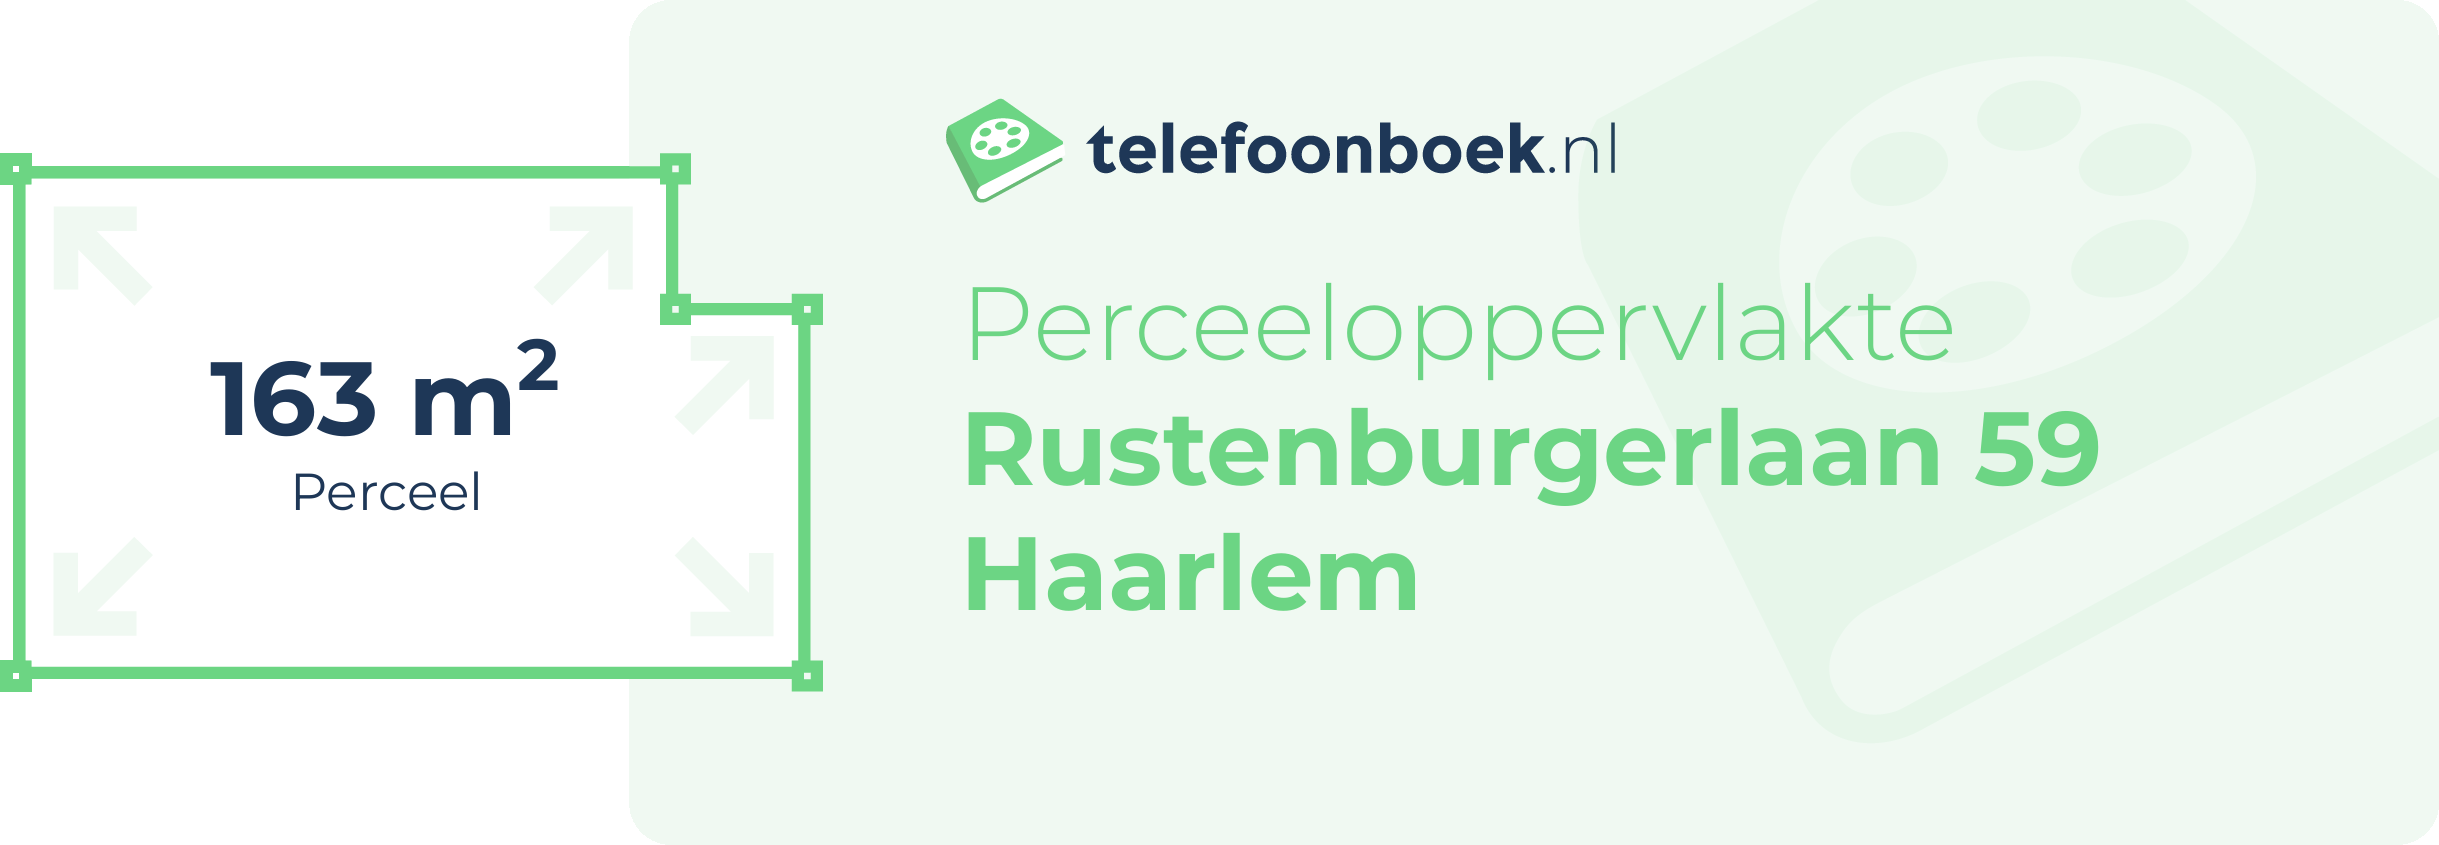 Perceeloppervlakte Rustenburgerlaan 59 Haarlem